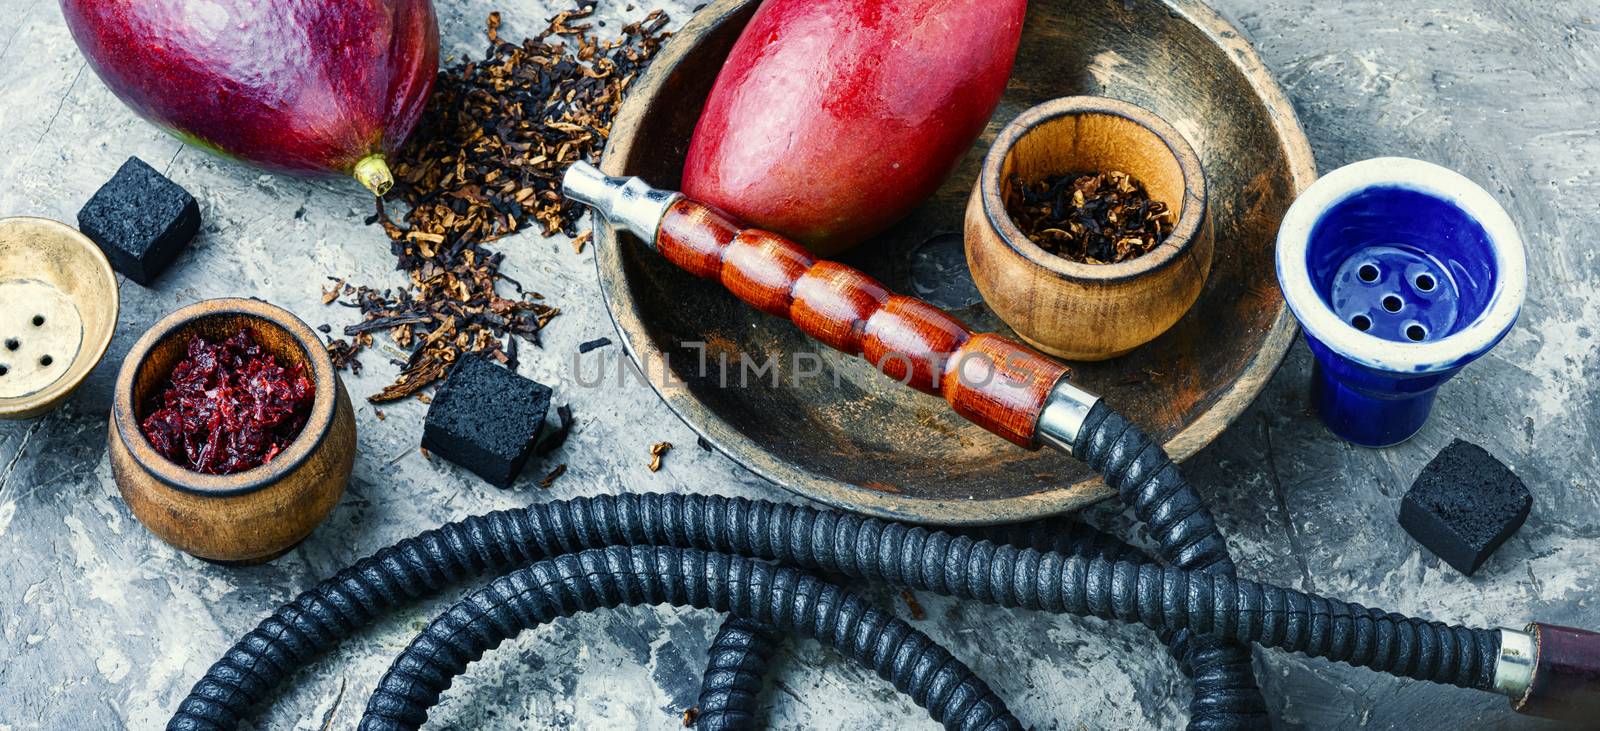 Details of the egyptian hookah.Shisha with mango flavor.Smoking apple tobacco